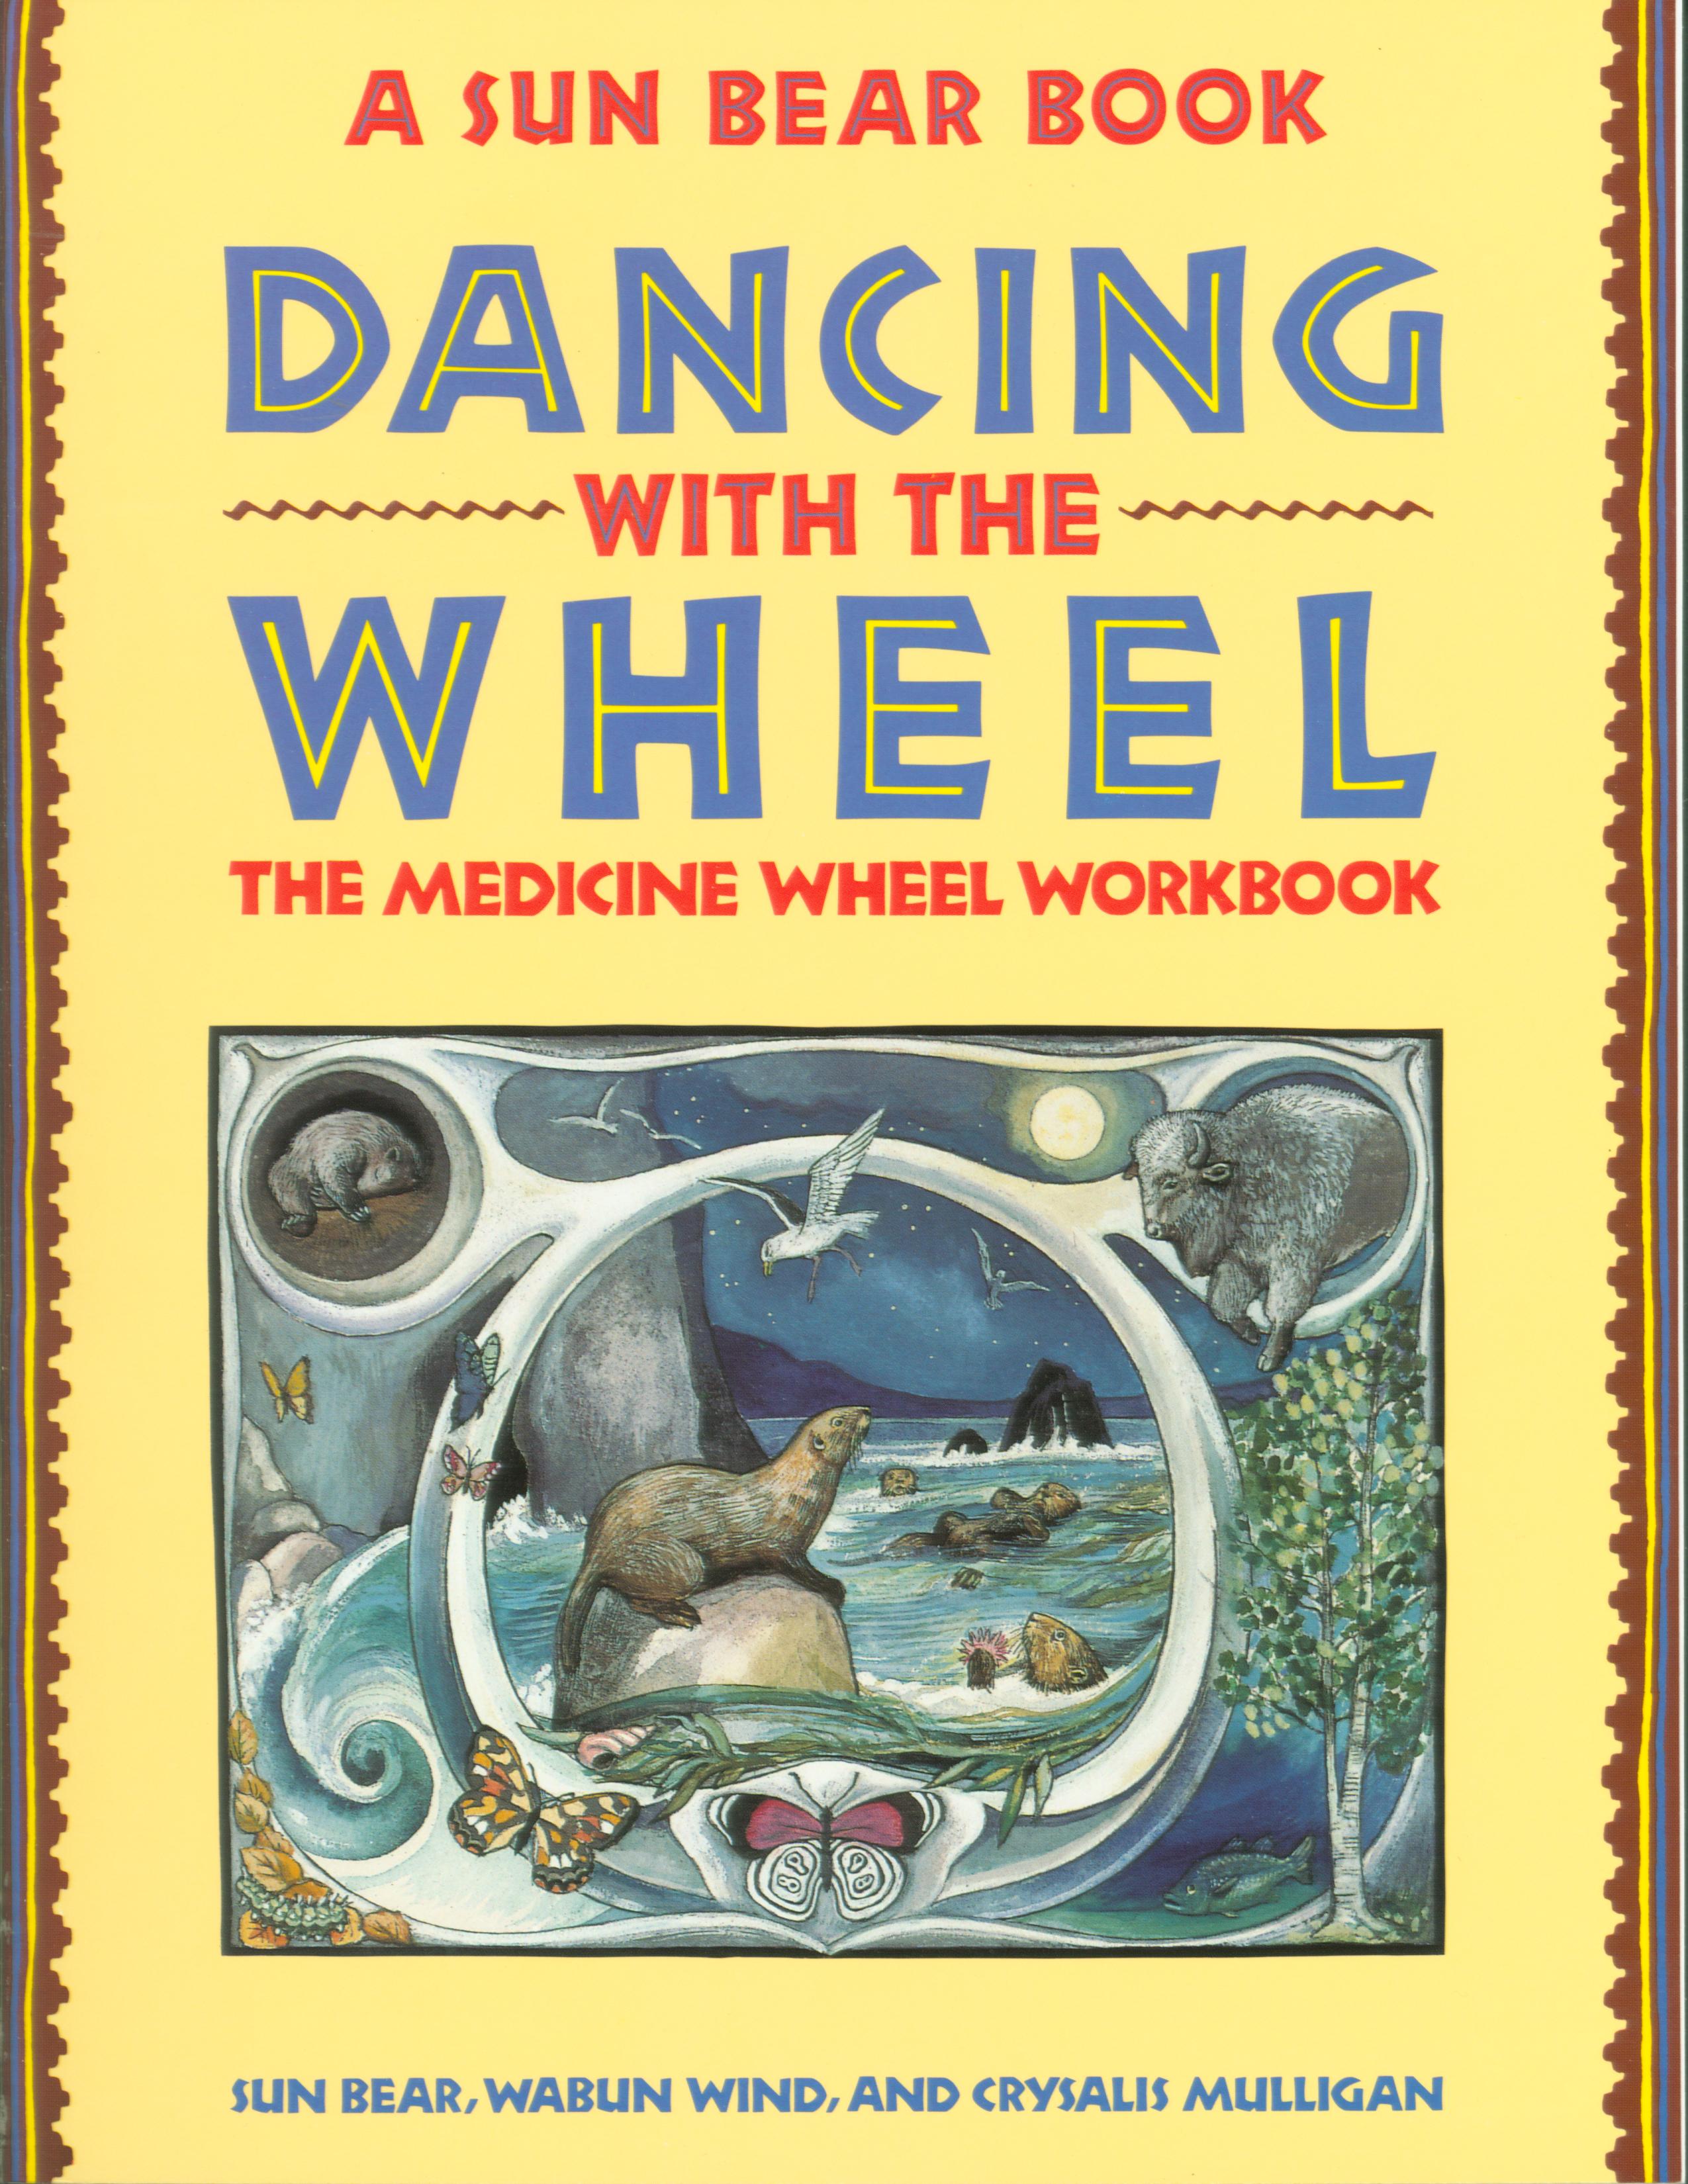 DanciNG WITH THE WHEEL: the Medicine Wheel workbook